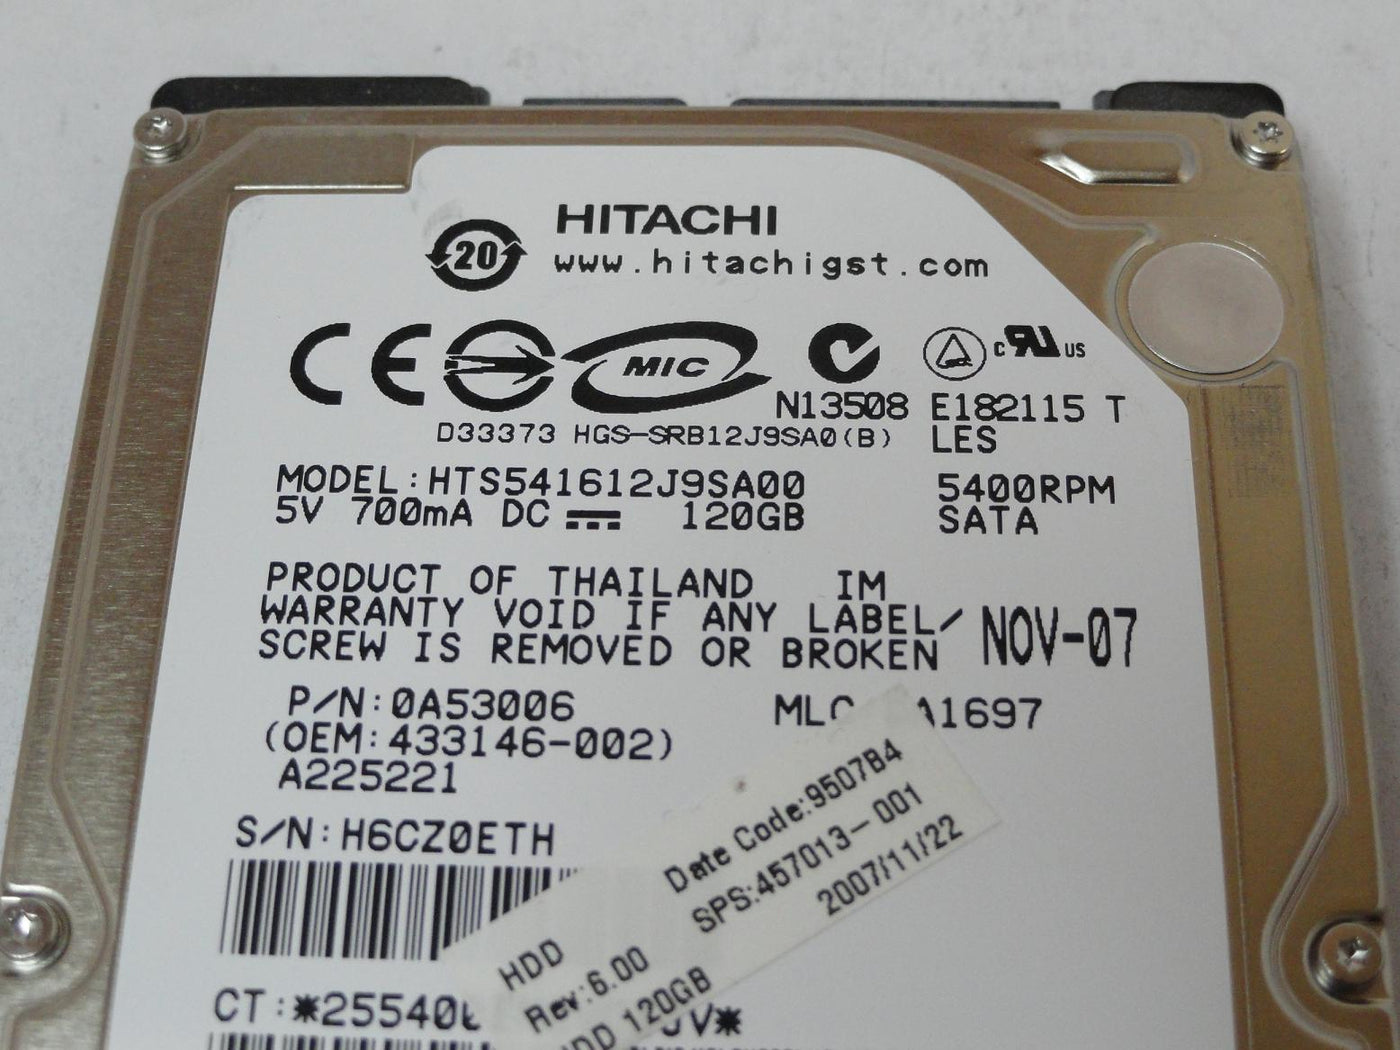 PR23984_0A53006_Hitachi HP 120GB SATA 5400rpm 2.5in HDD - Image3